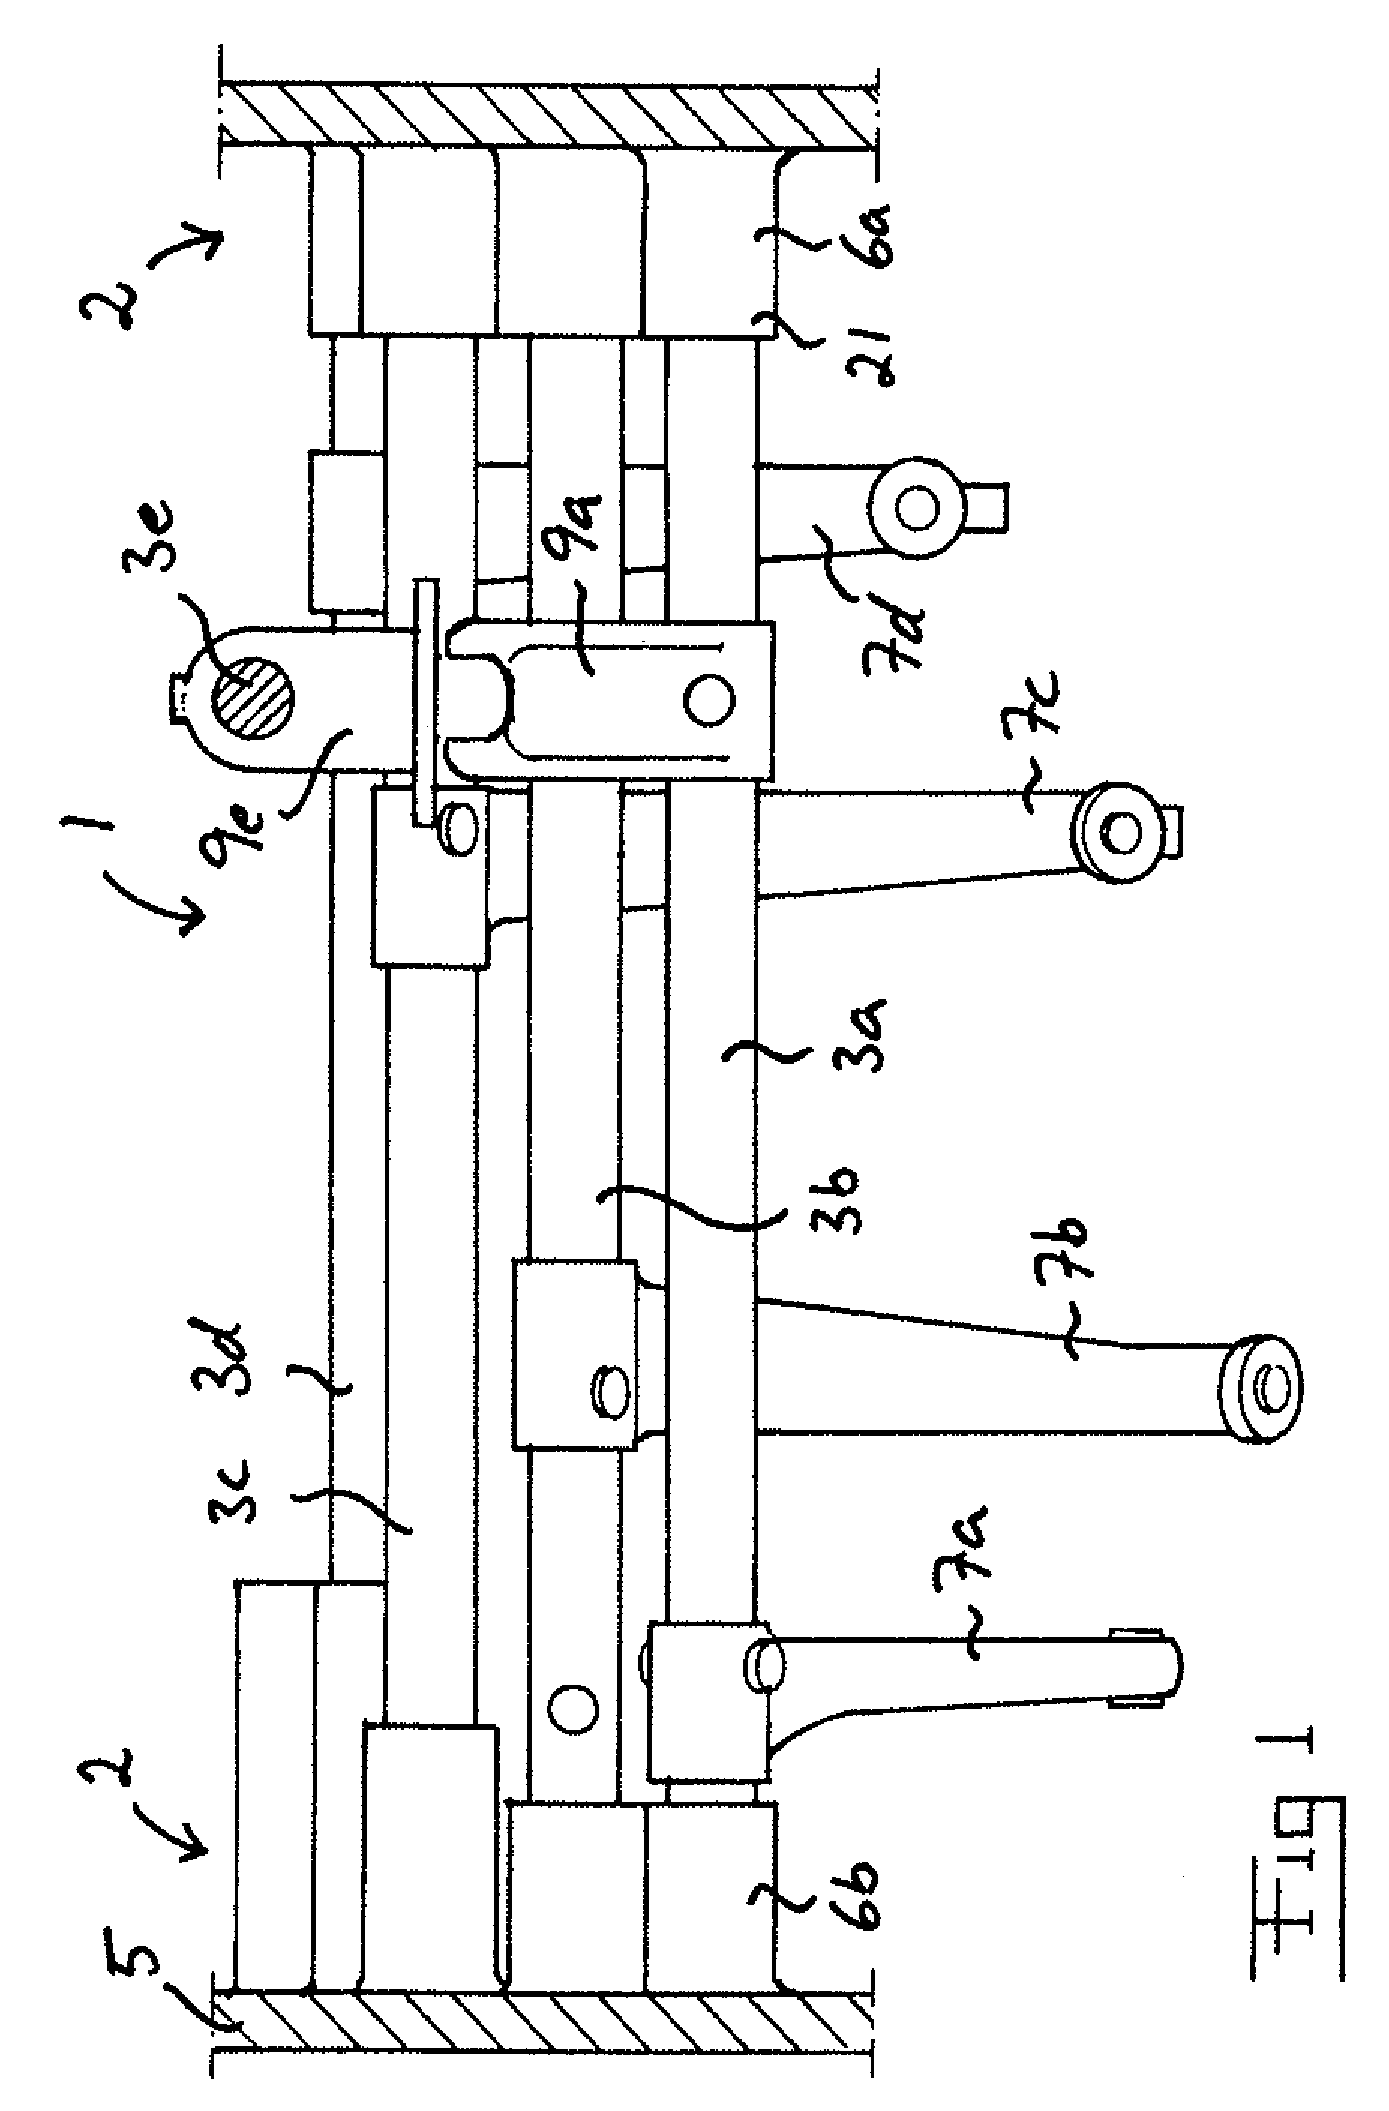 Control arrangement and gearbox